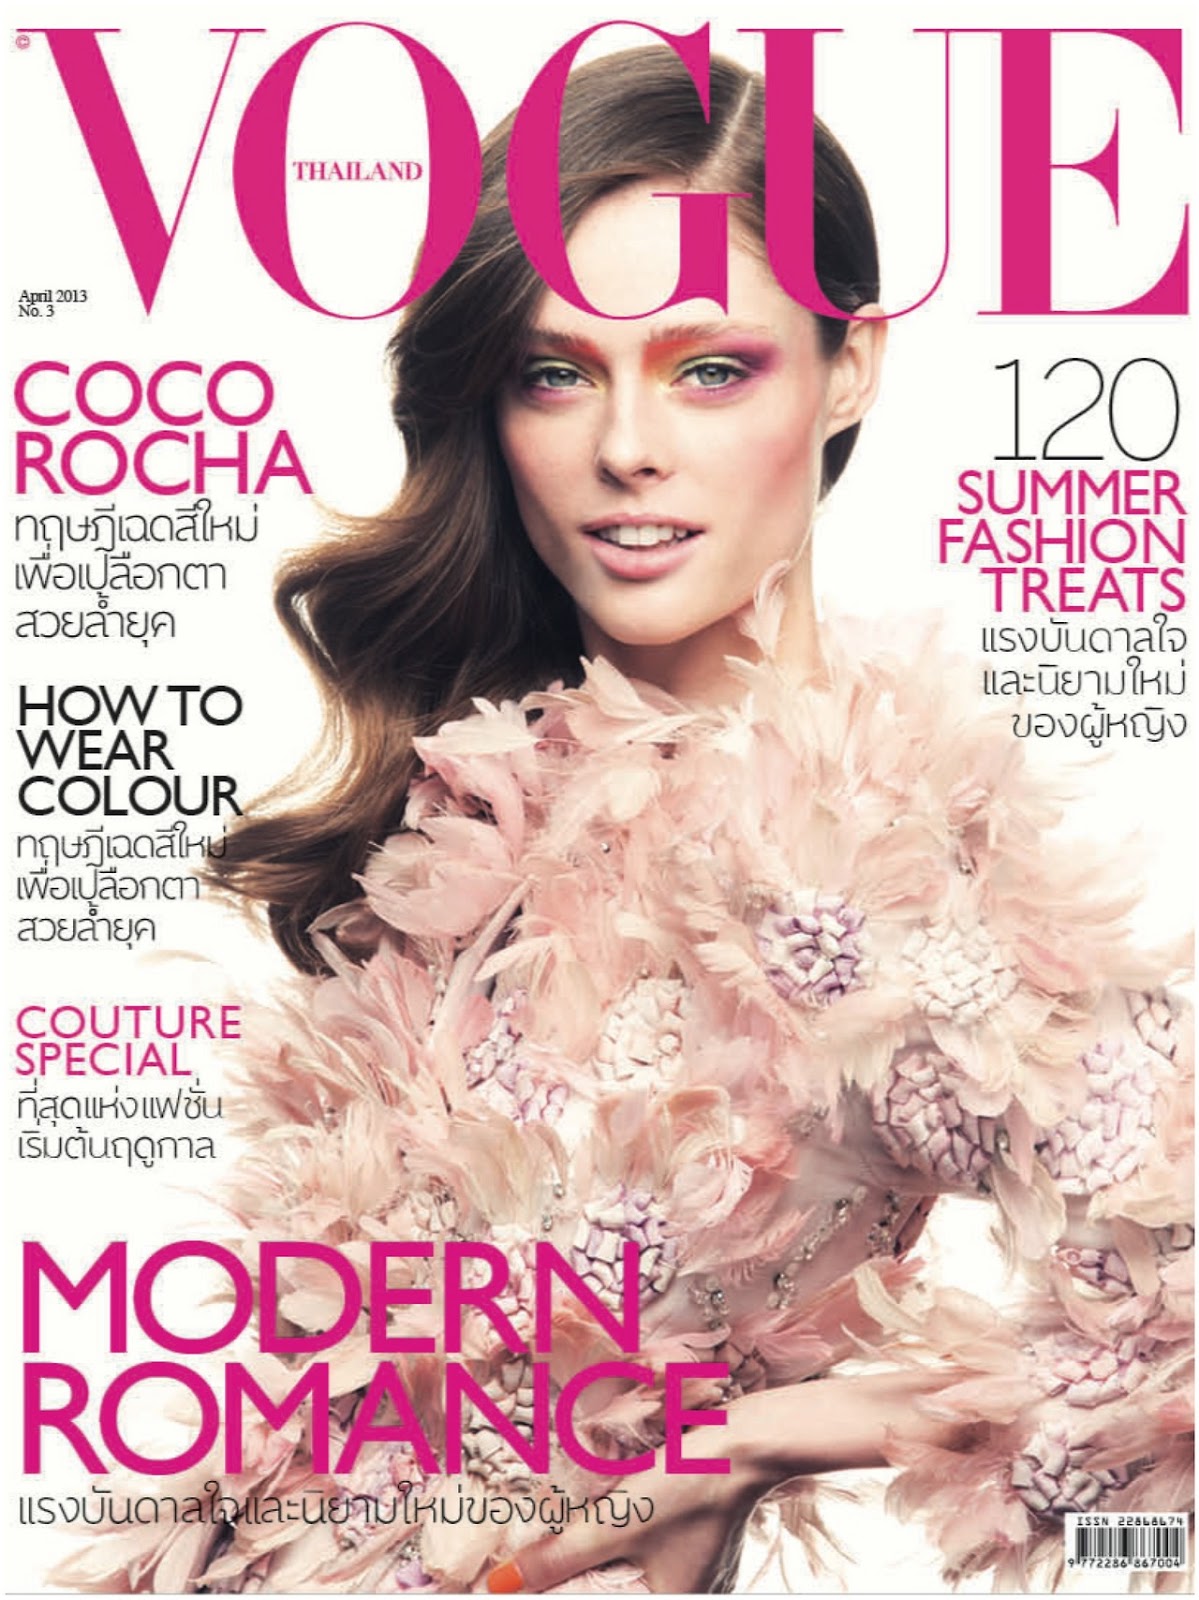 ELITE MODEL MANAGEMENT TORONTO : Coco on the Vogue Thailand April Cover